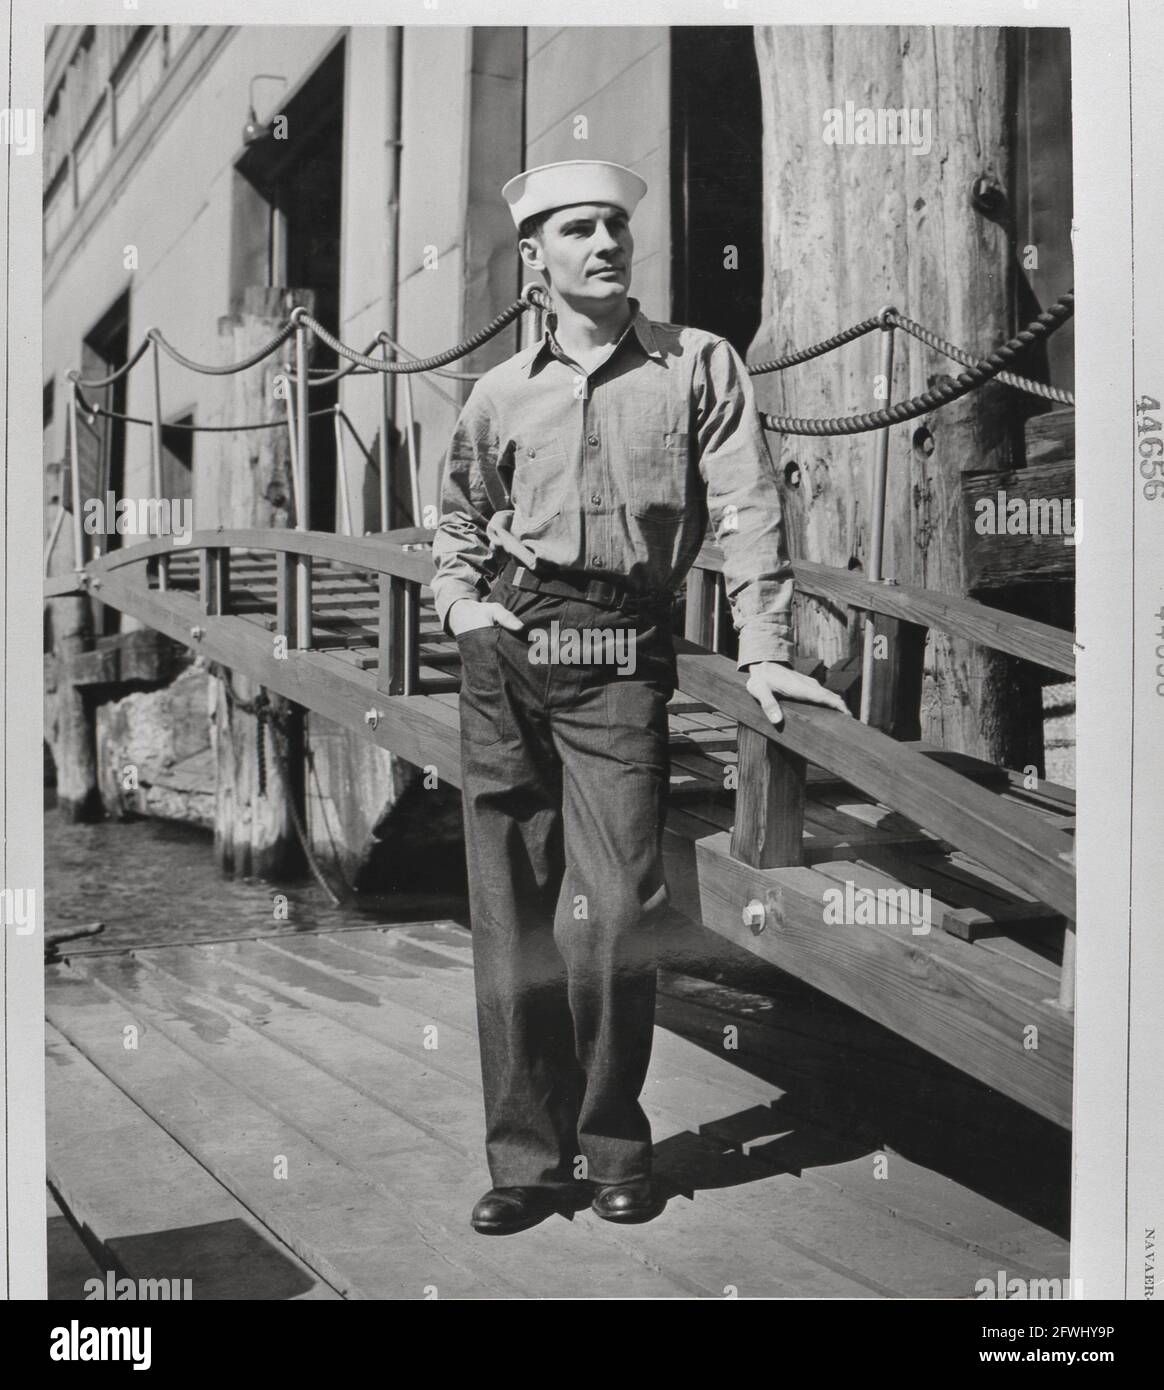 1940s Navy Uniform